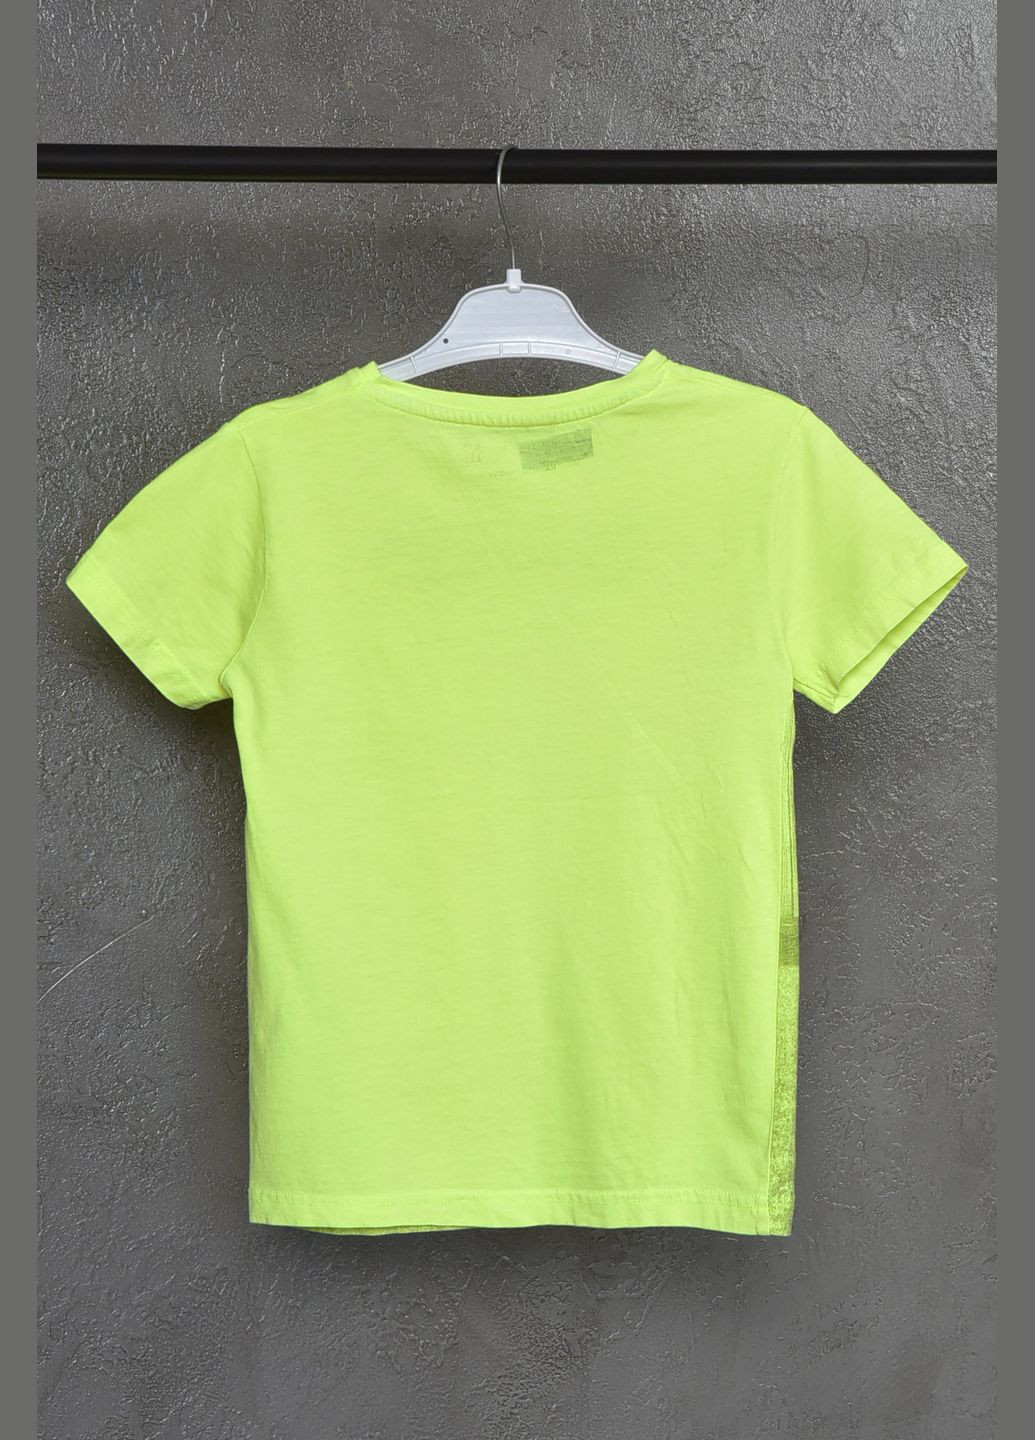 Салатова літня футболка дитяча для хлопчика салатового кольору Let's Shop